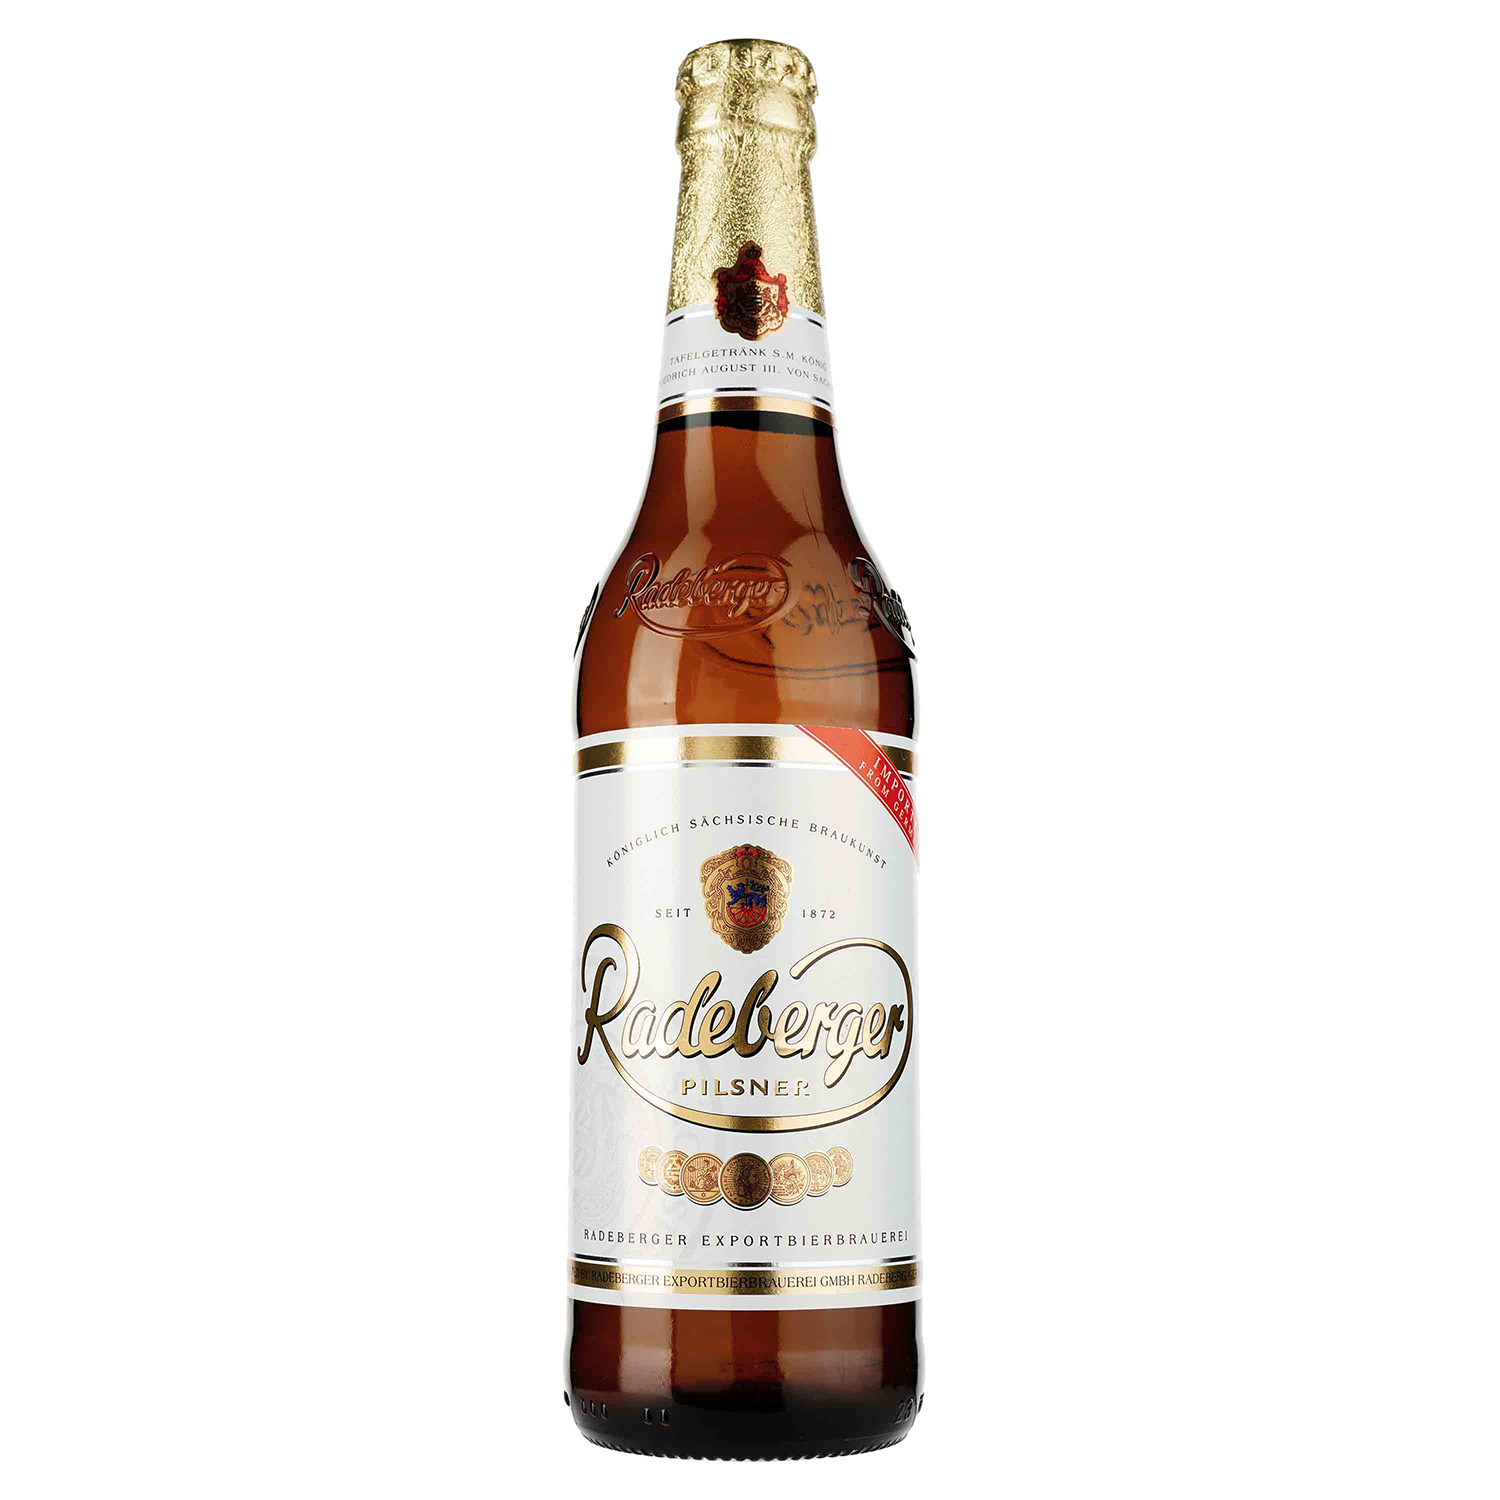 Пиво Radeberger Pilsner светлое, 4.8%, 0.5 л - фото 1